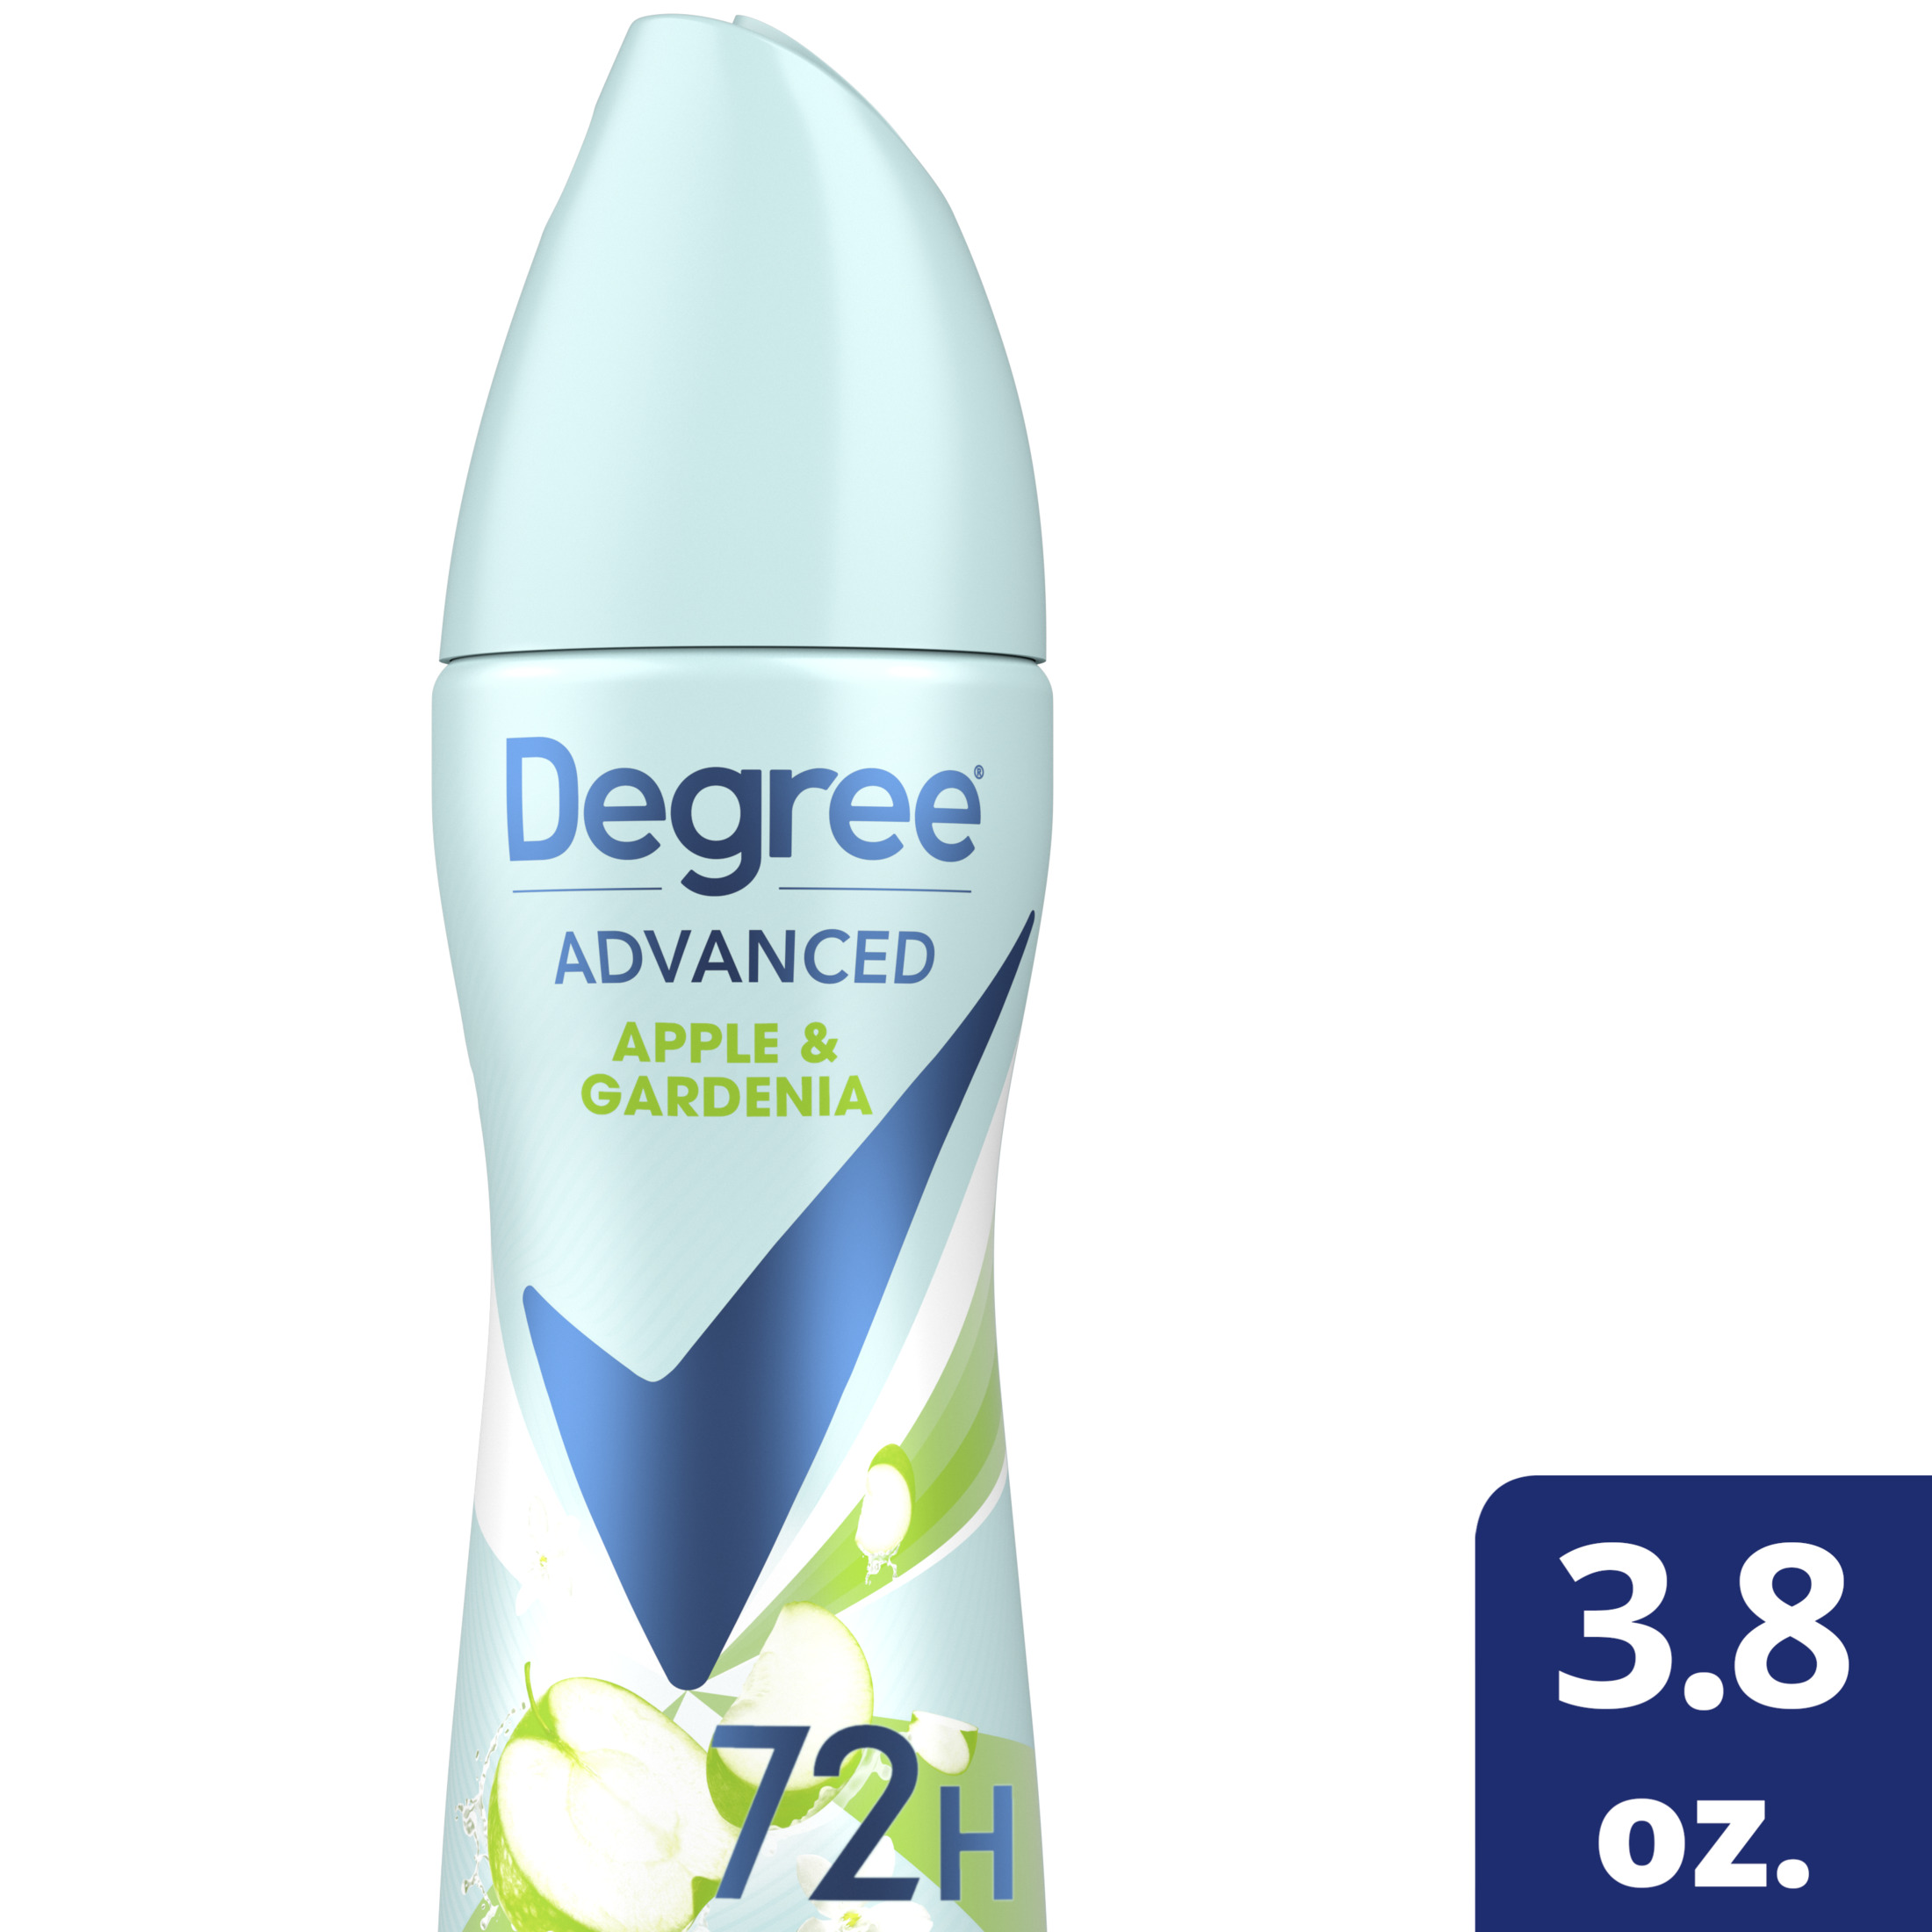 Degree Antiperspirant Spray Deodorant for Women Apple & Gardenia 72-Hour Protection 3.8 oz - image 1 of 11